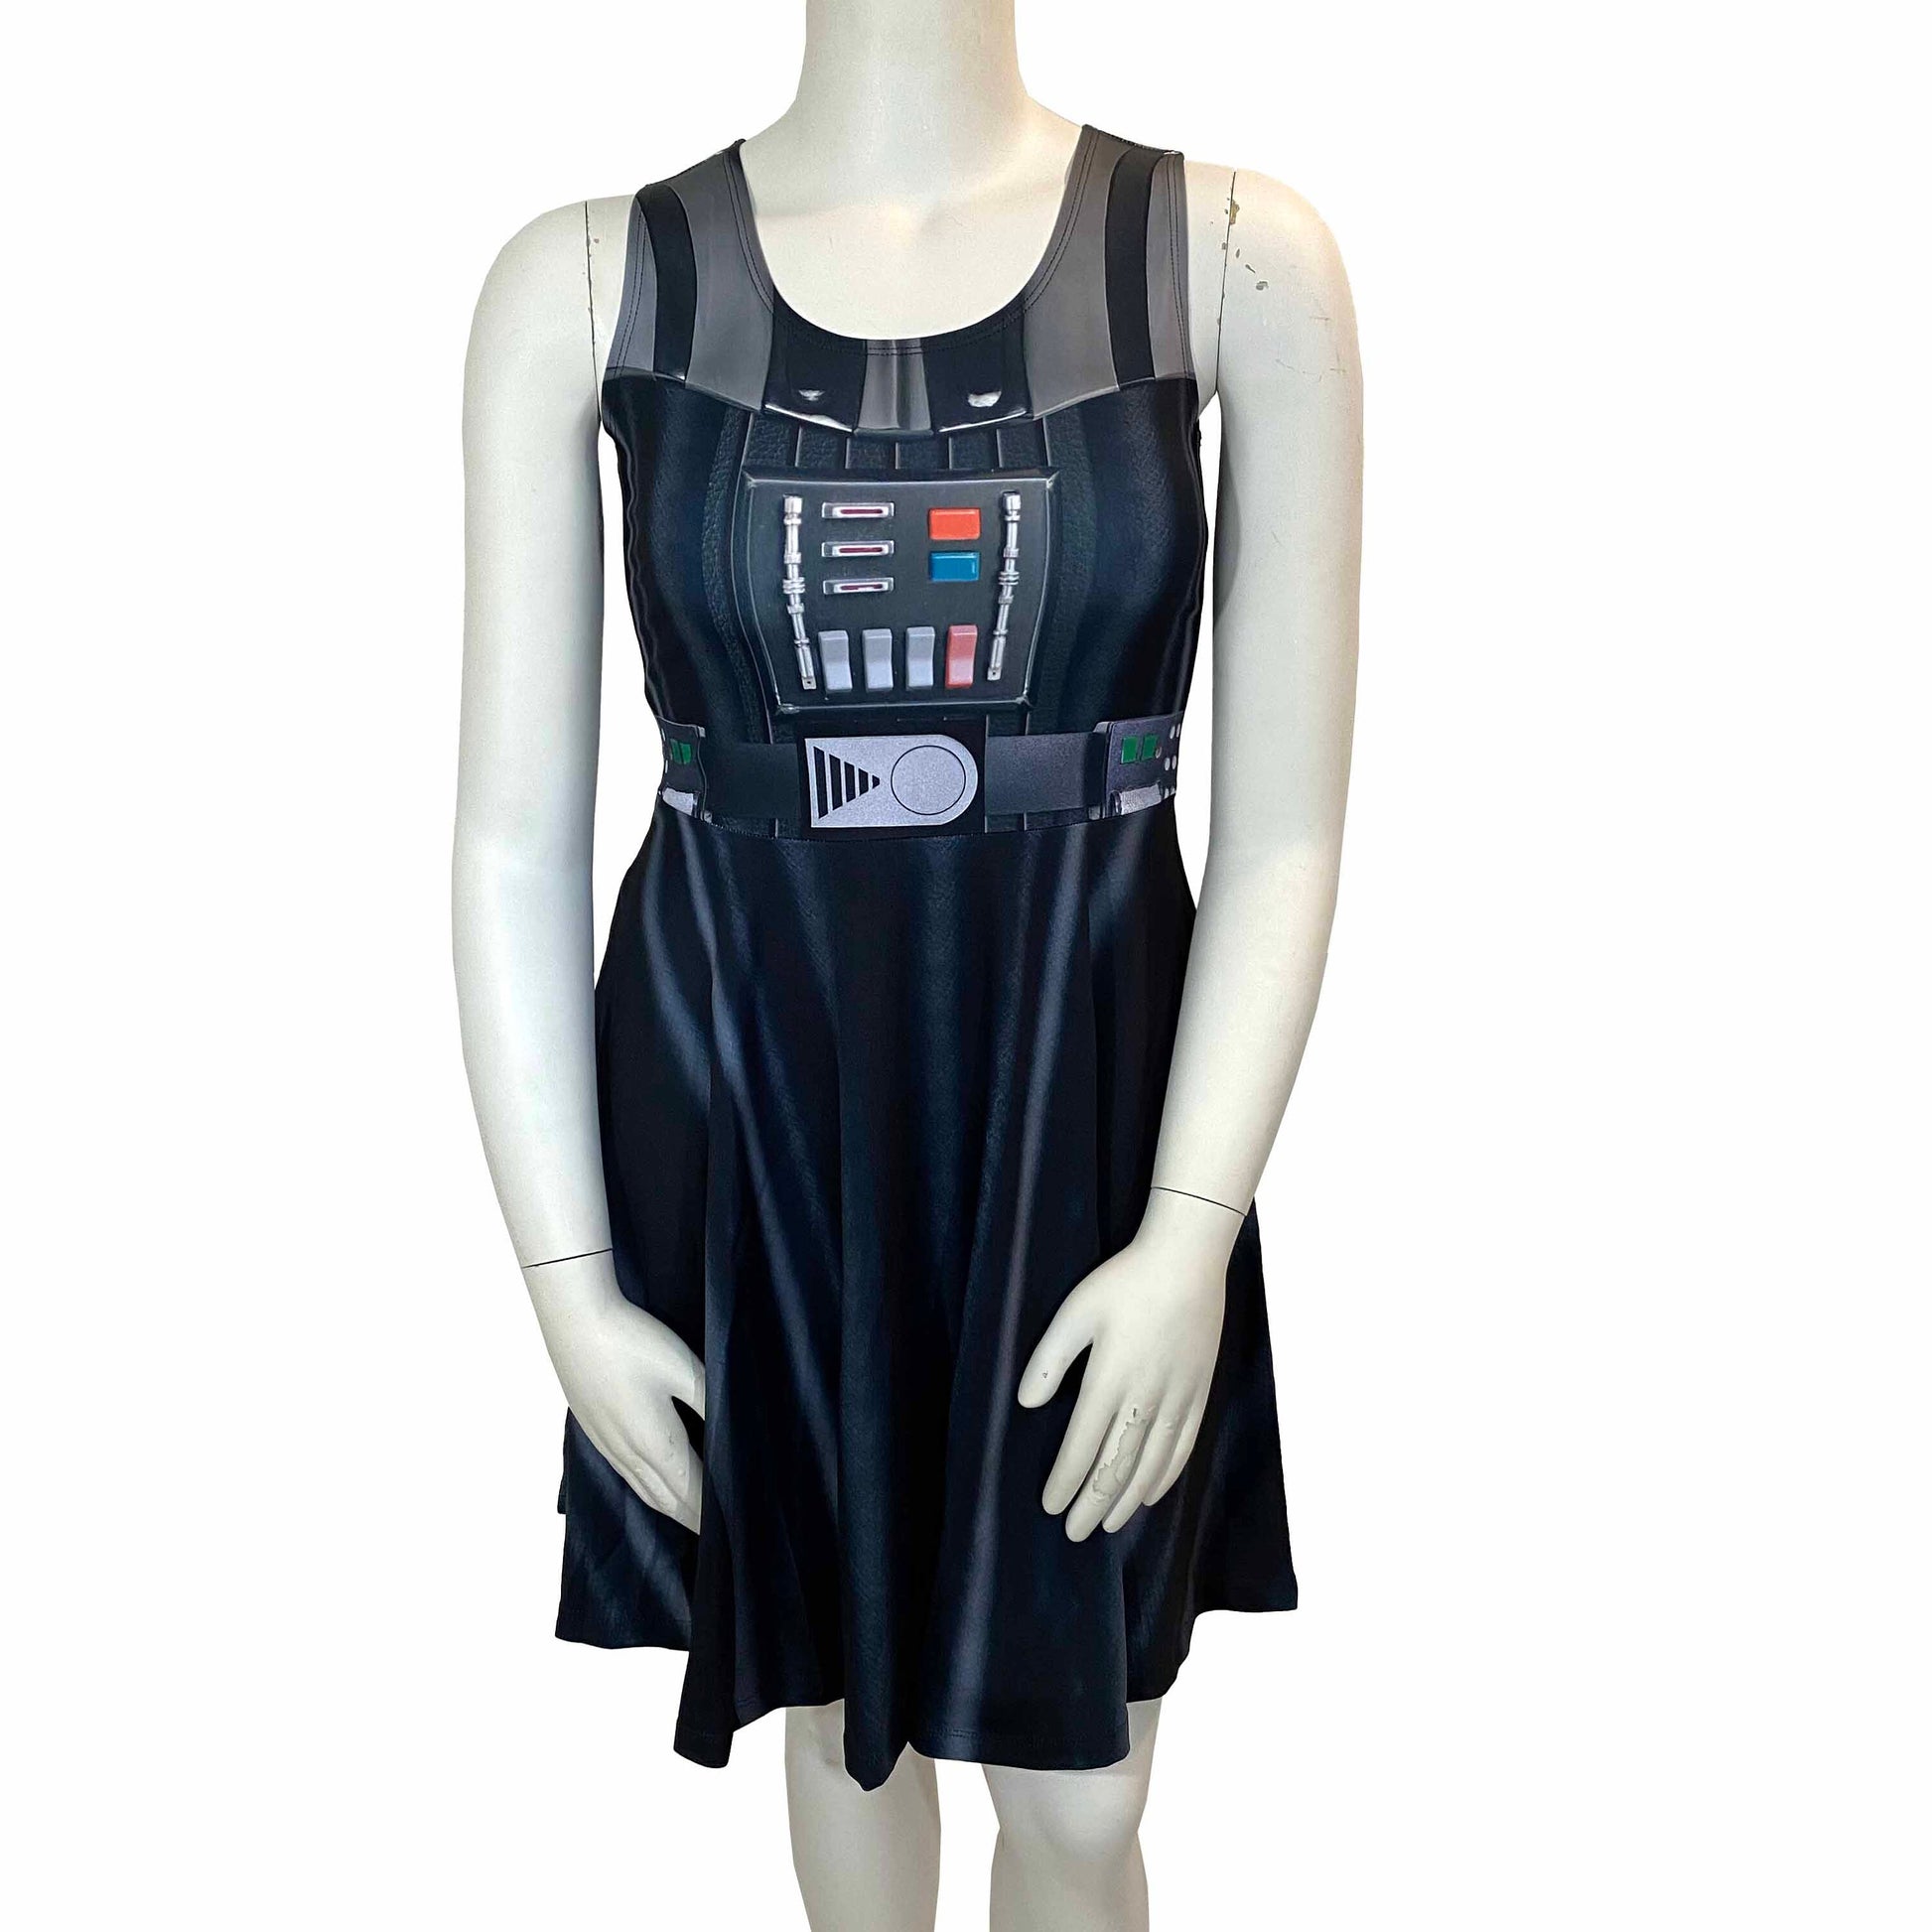 RUSH ORDER: Darth Vader Star Wars Inspired Skater Dress